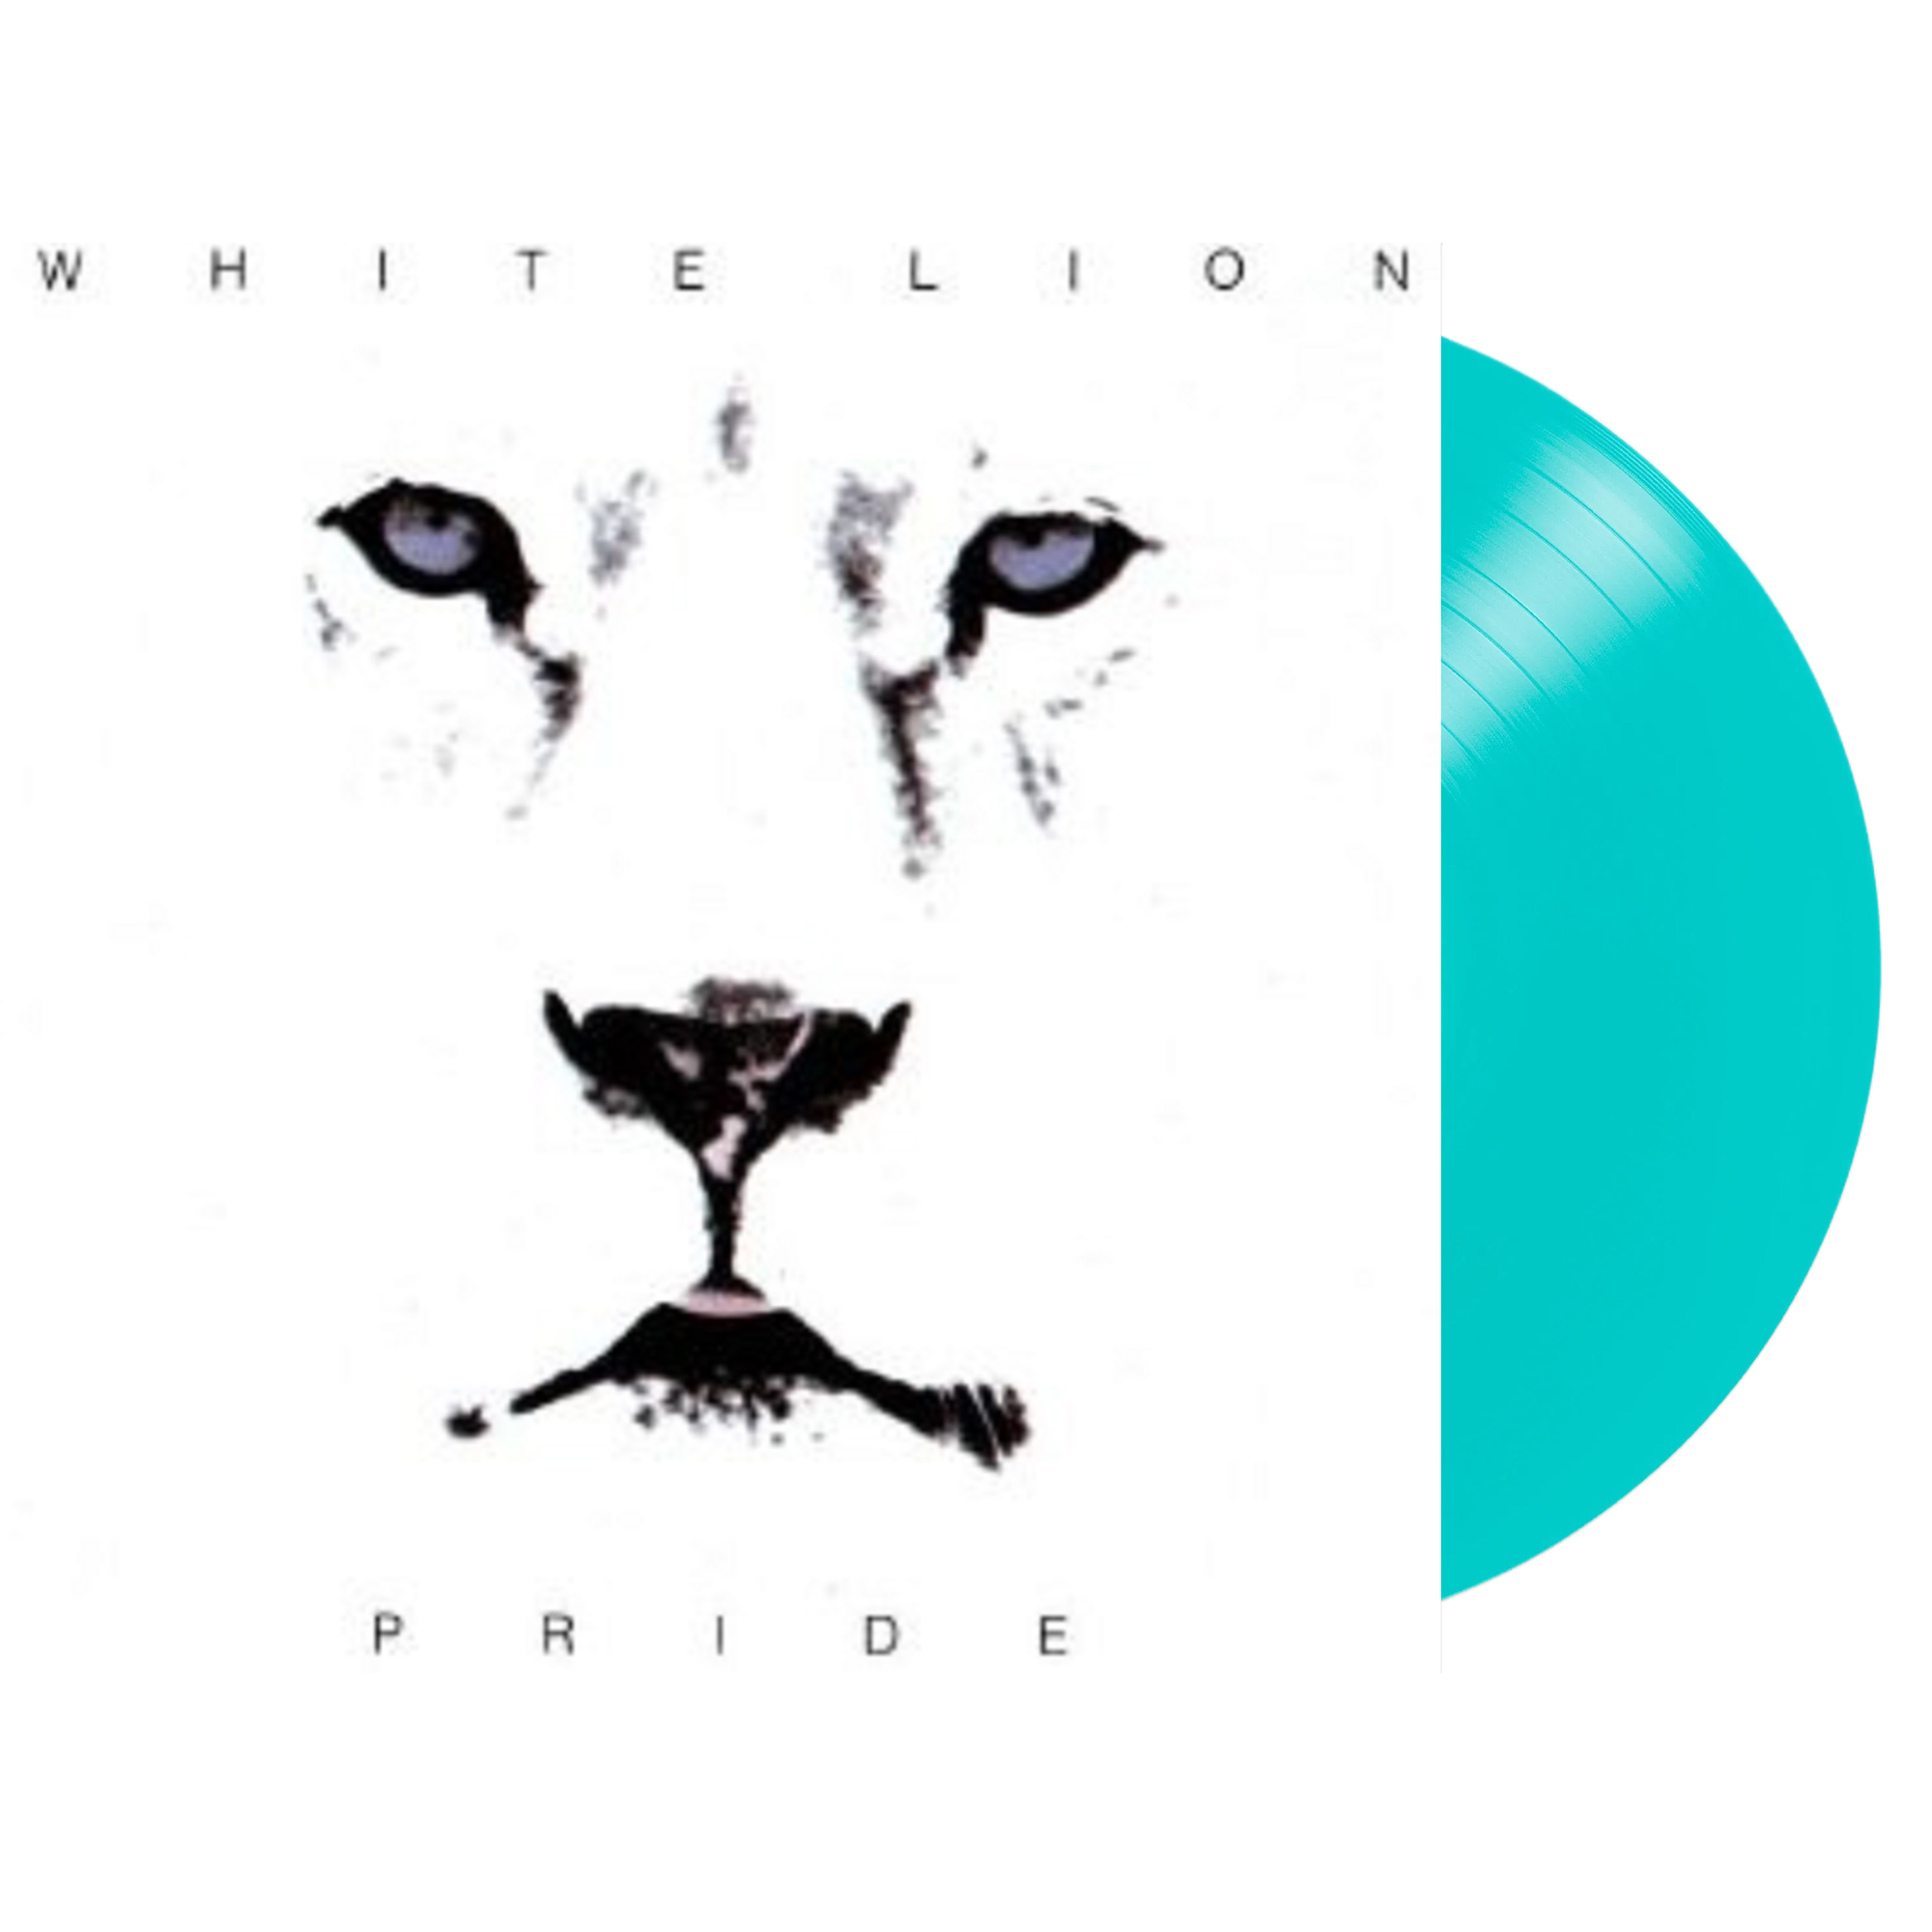 Eller enten Jurassic Park vegetarisk White Lion - Pride (Turquoise Vinyl/35th Anniversary Limited Edition/G